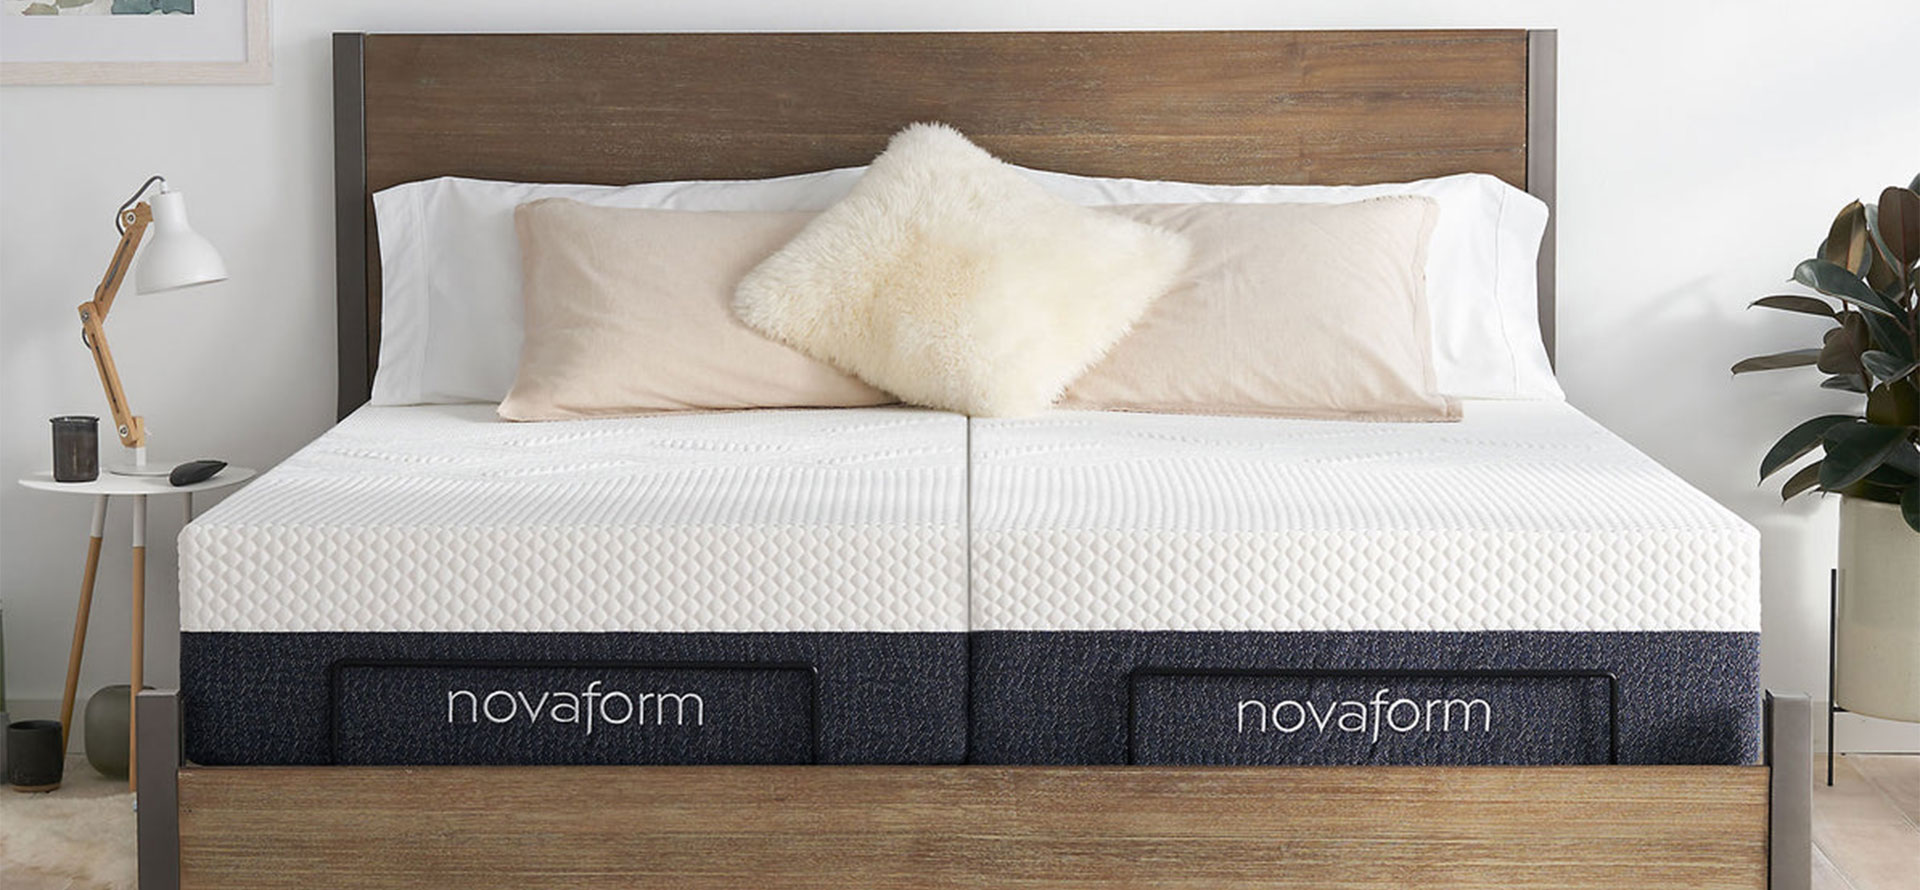 Novaform mattress on a bed.